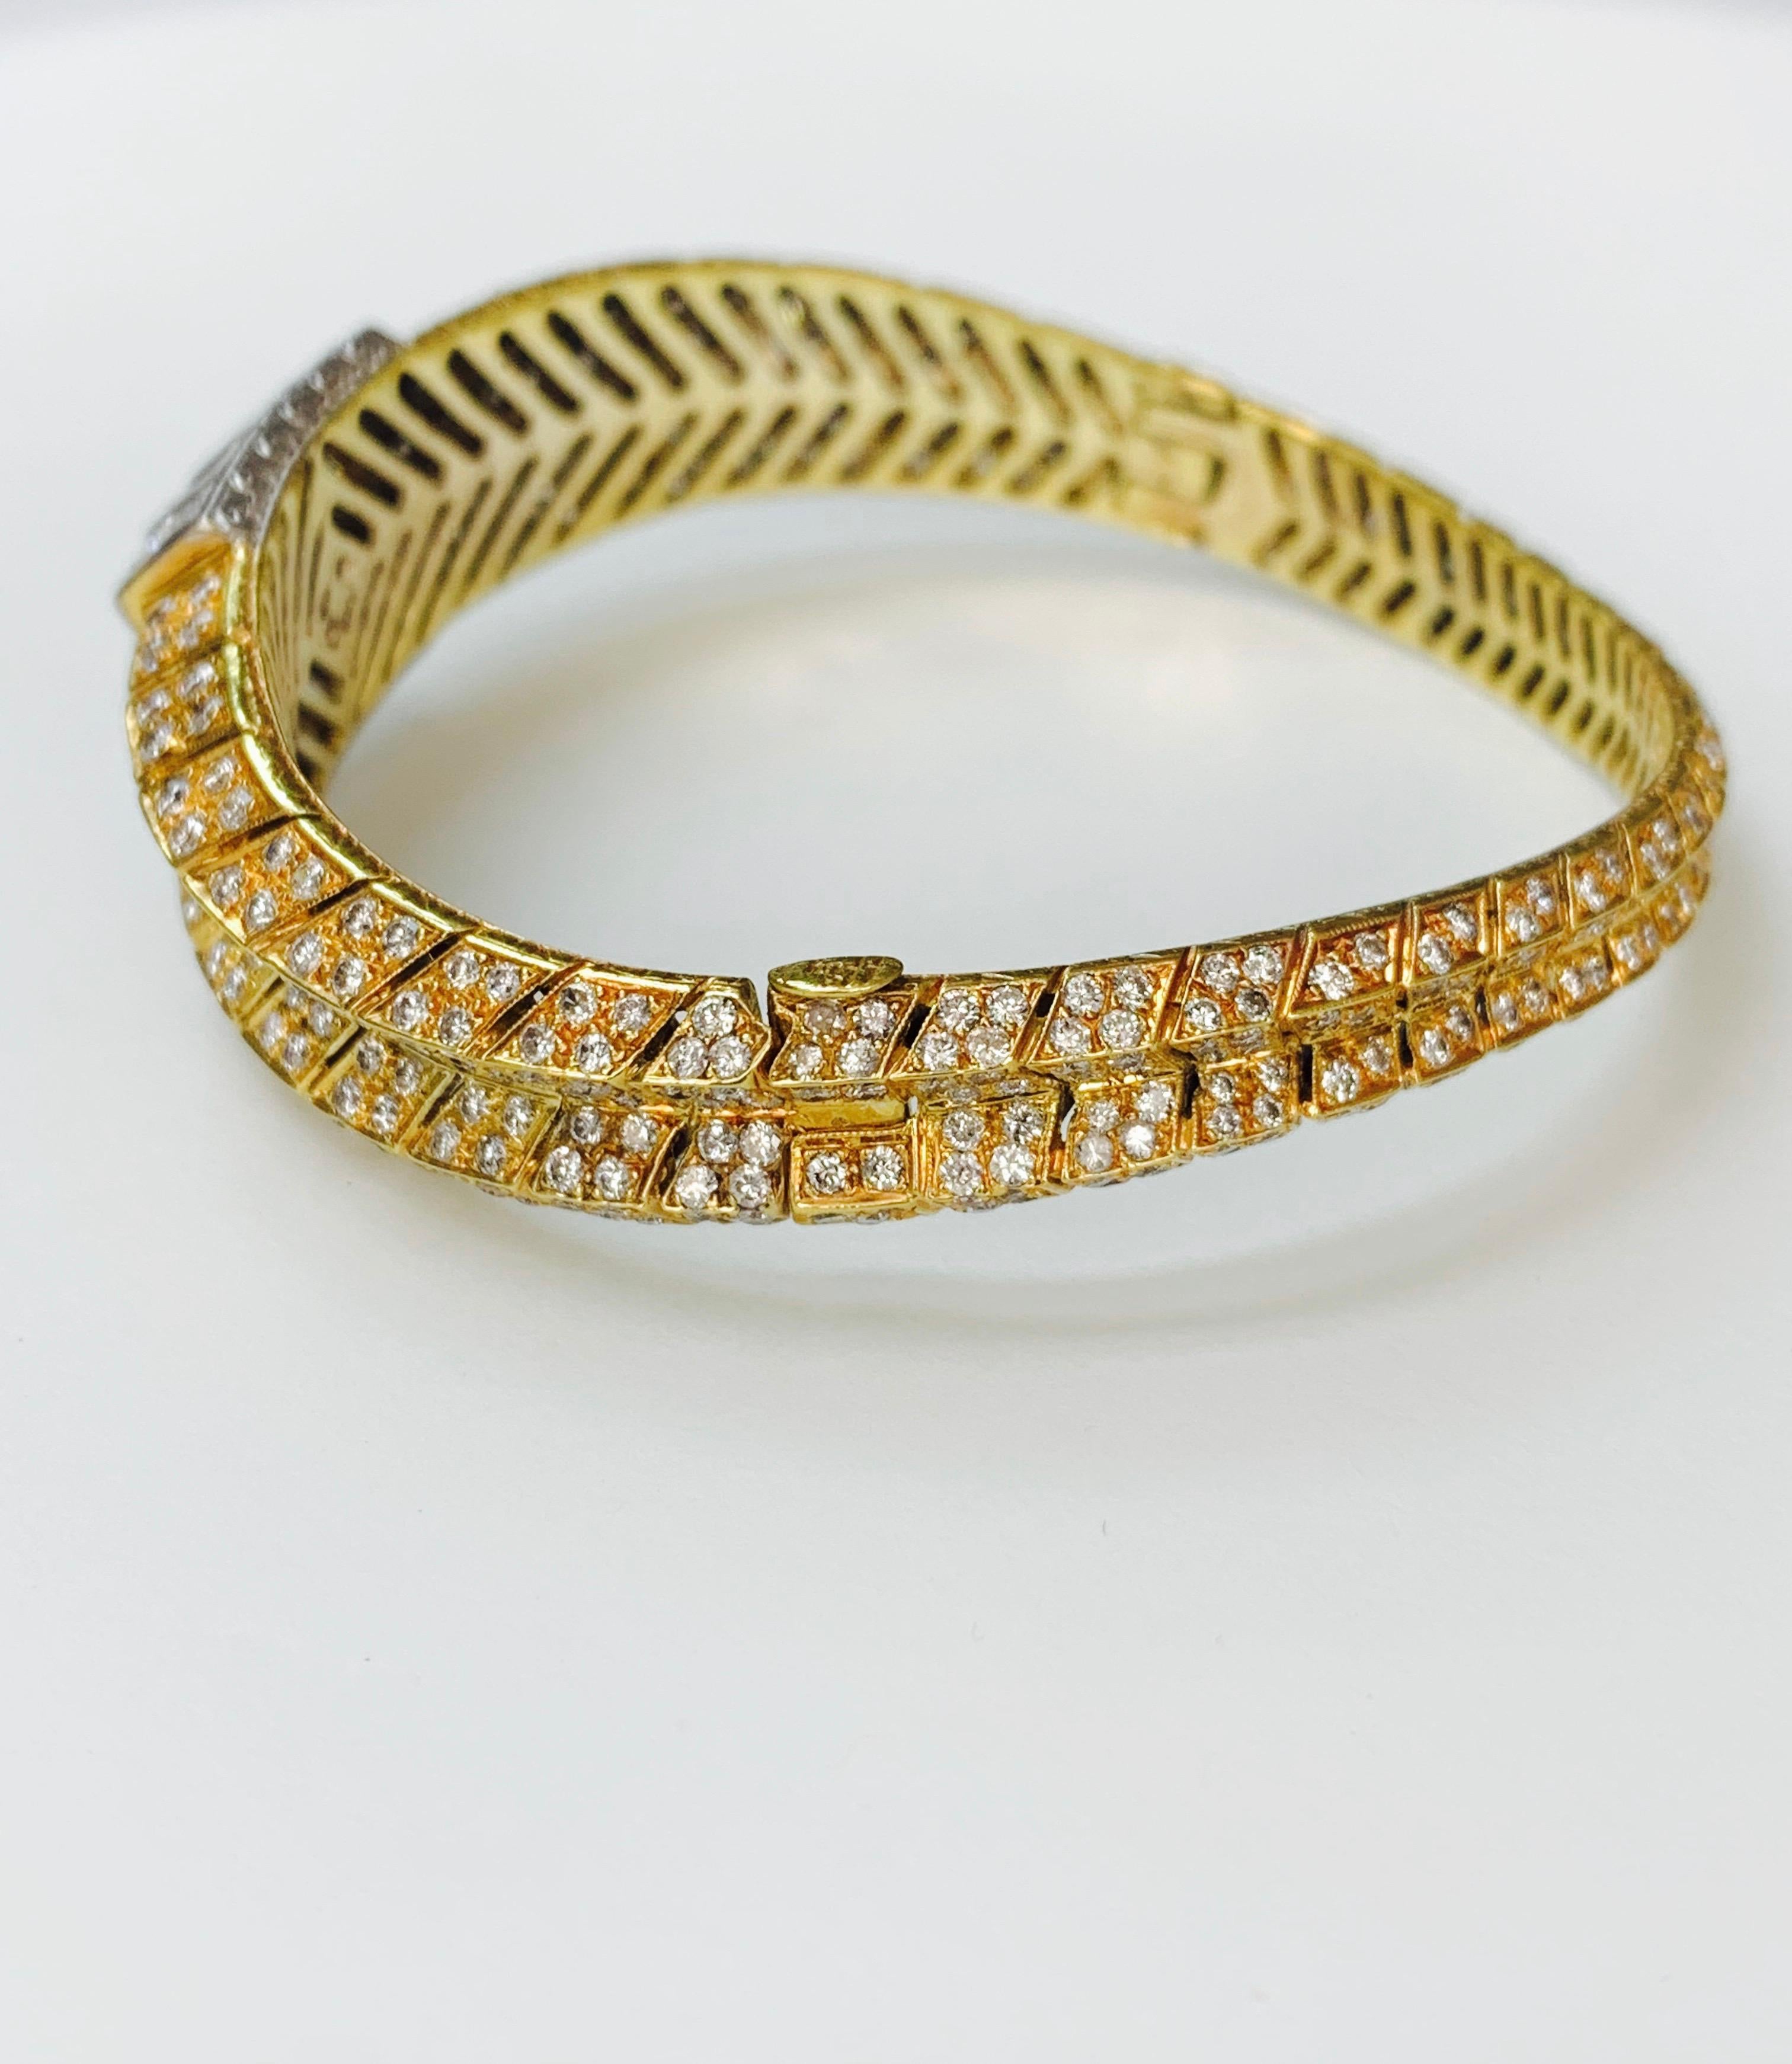 18 carat gold bangles